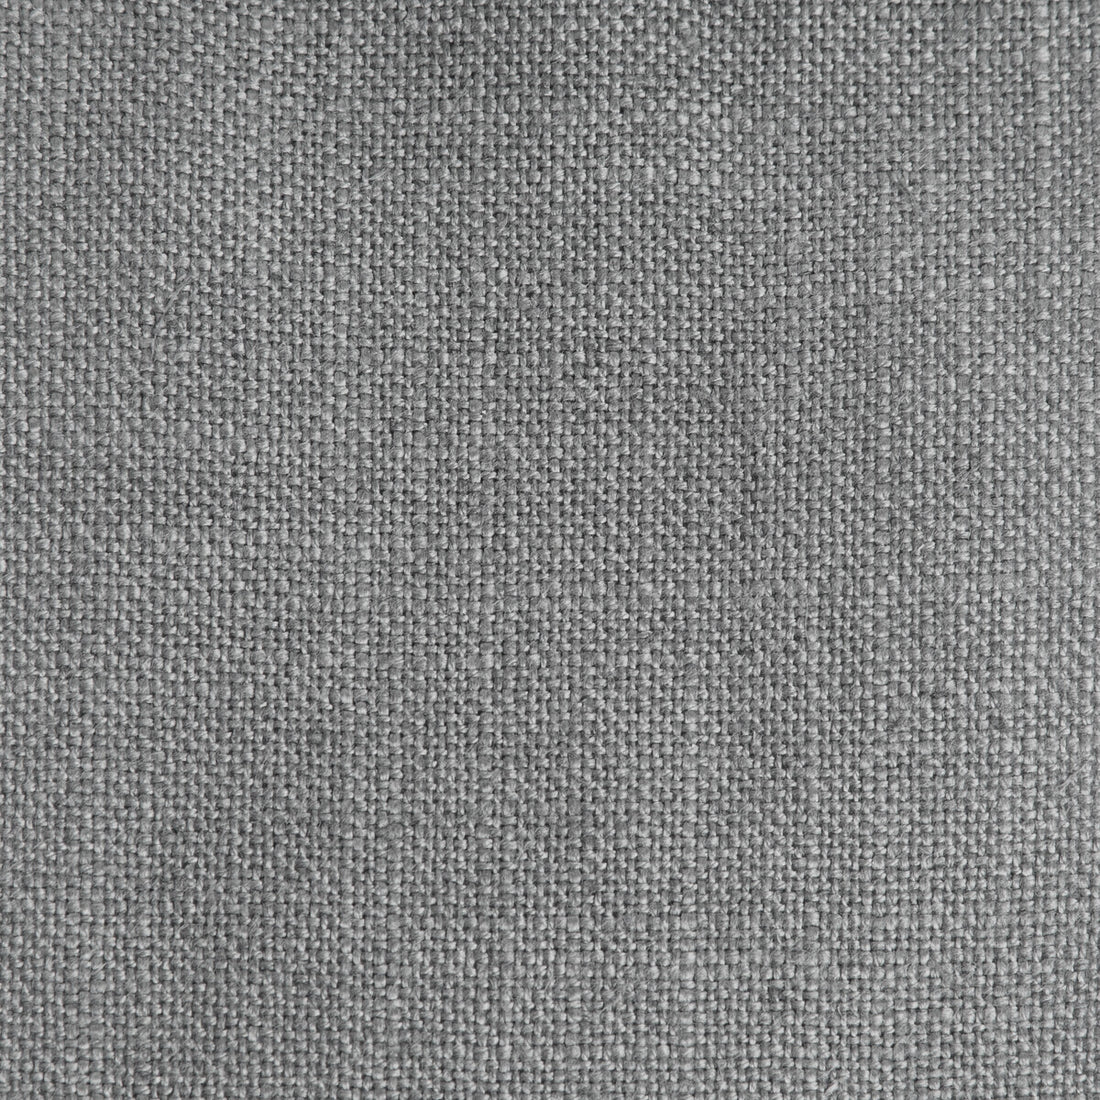 Peru fabric in gris color - pattern GDT5548.029.0 - by Gaston y Daniela in the Gaston Nuevo Mundo collection